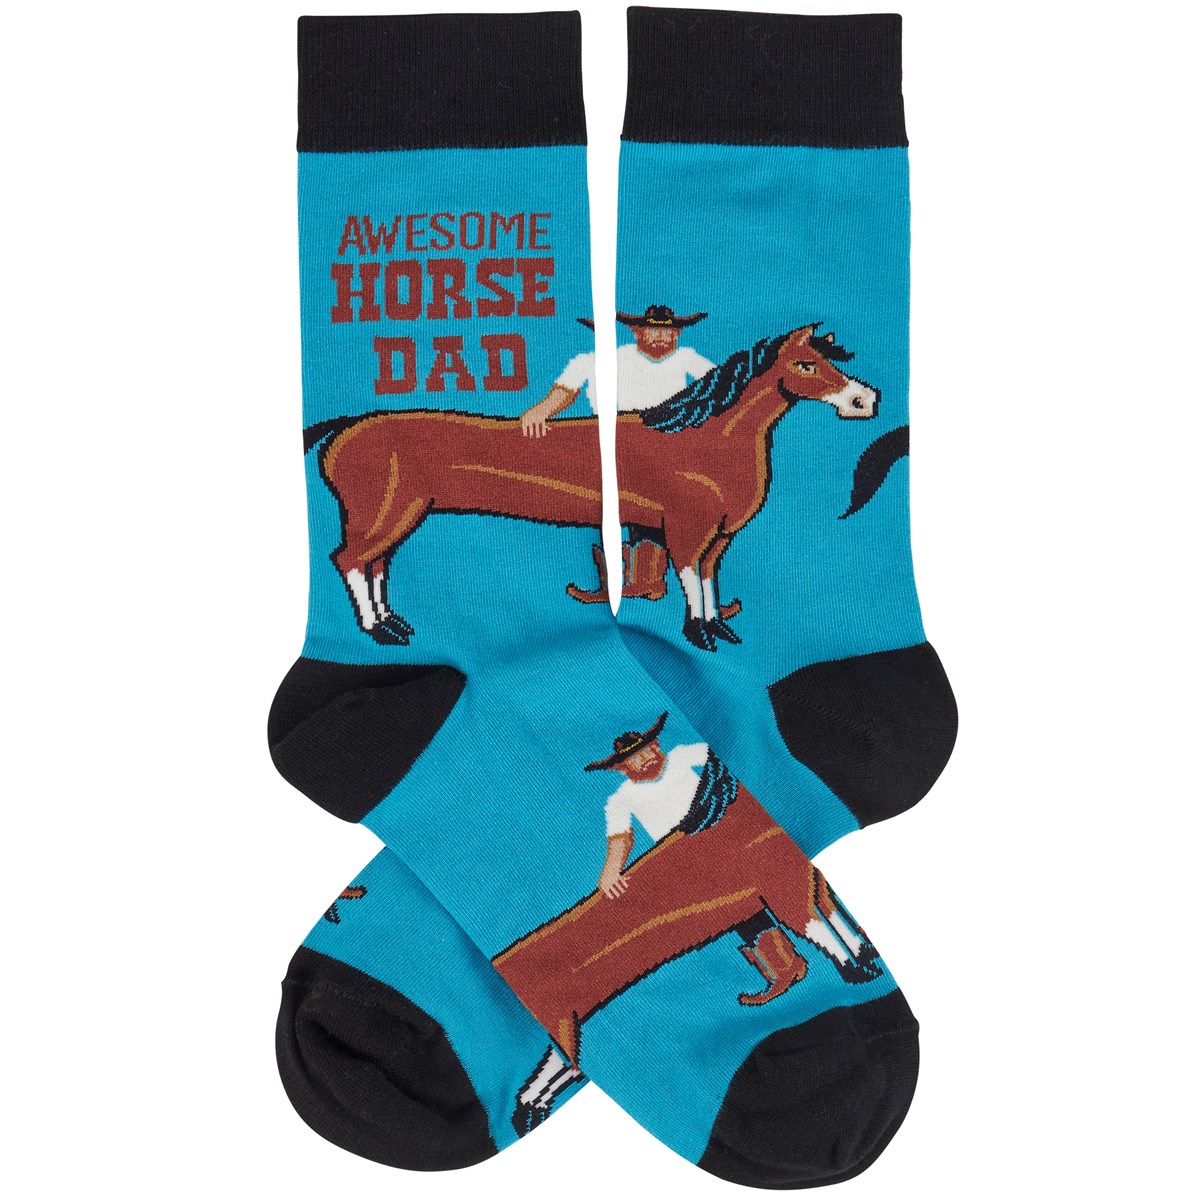 Awesome Horse Dad Socks - Cotton, Nylon, Spandex